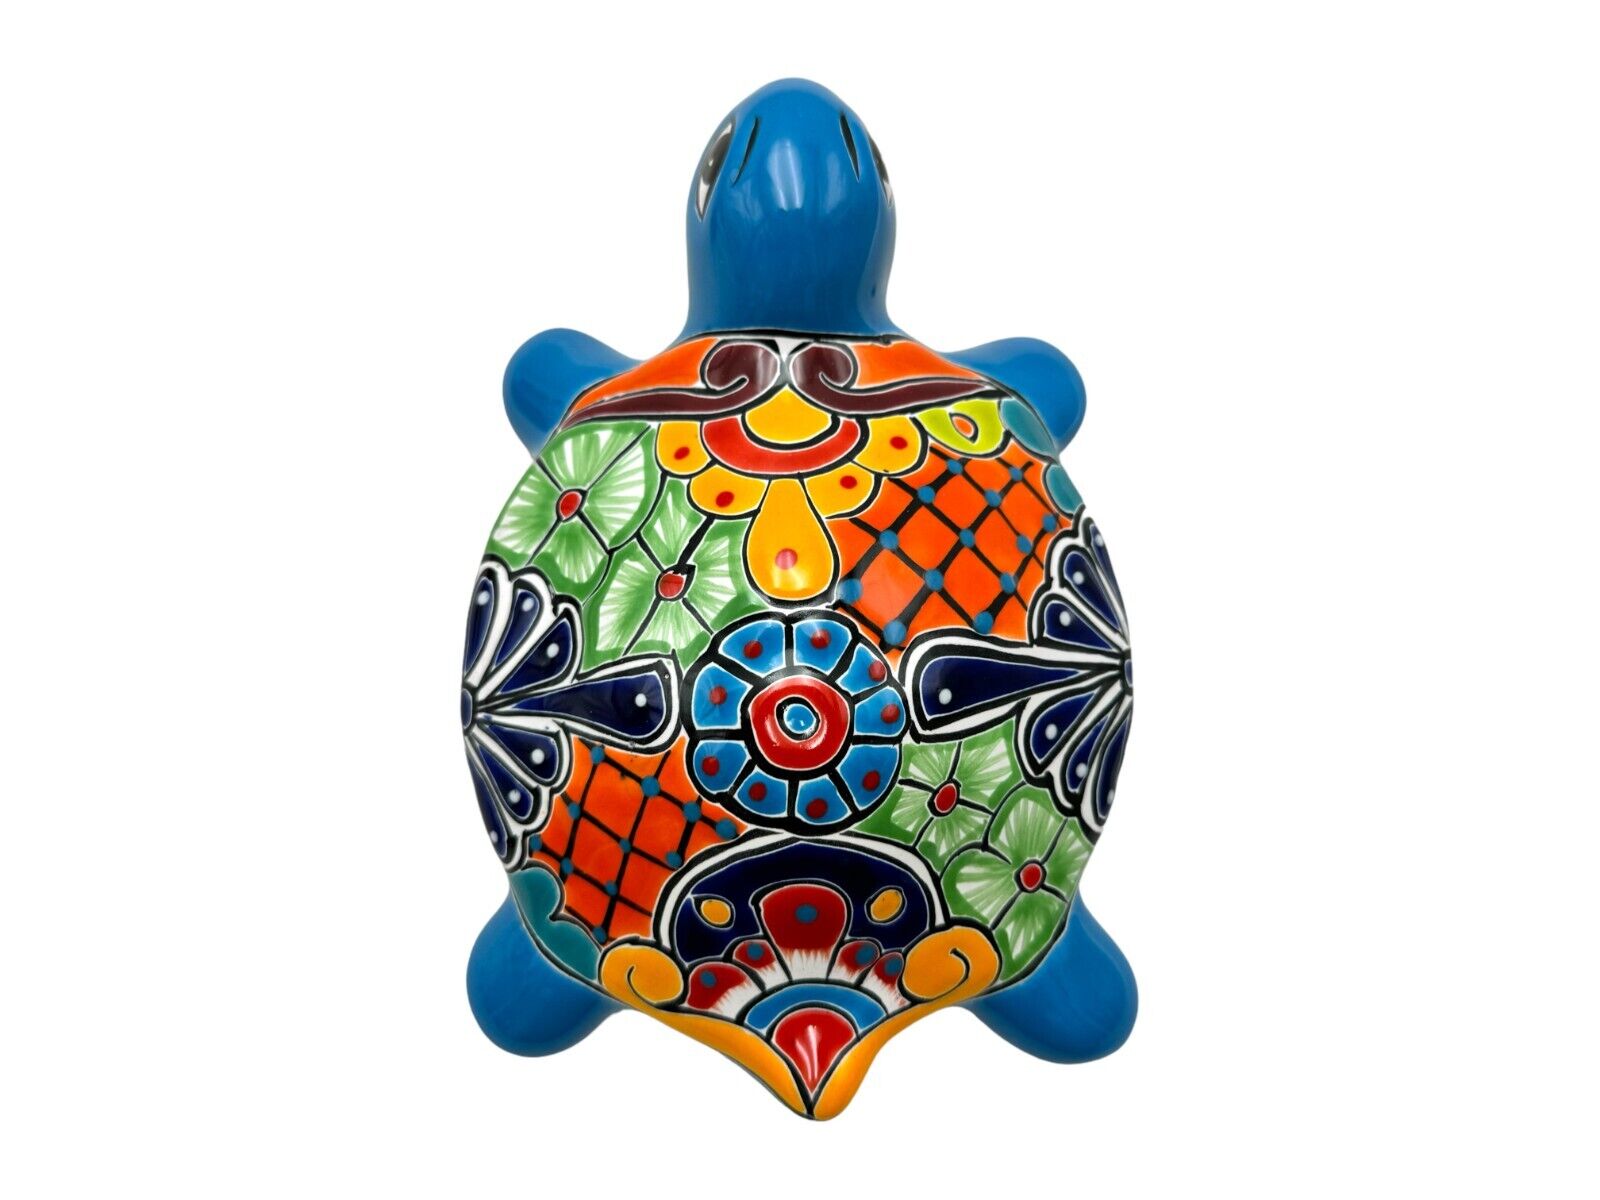 Talavera Turtle Mexican Pottery Folk Art Hand Painted Home Decor 10.25